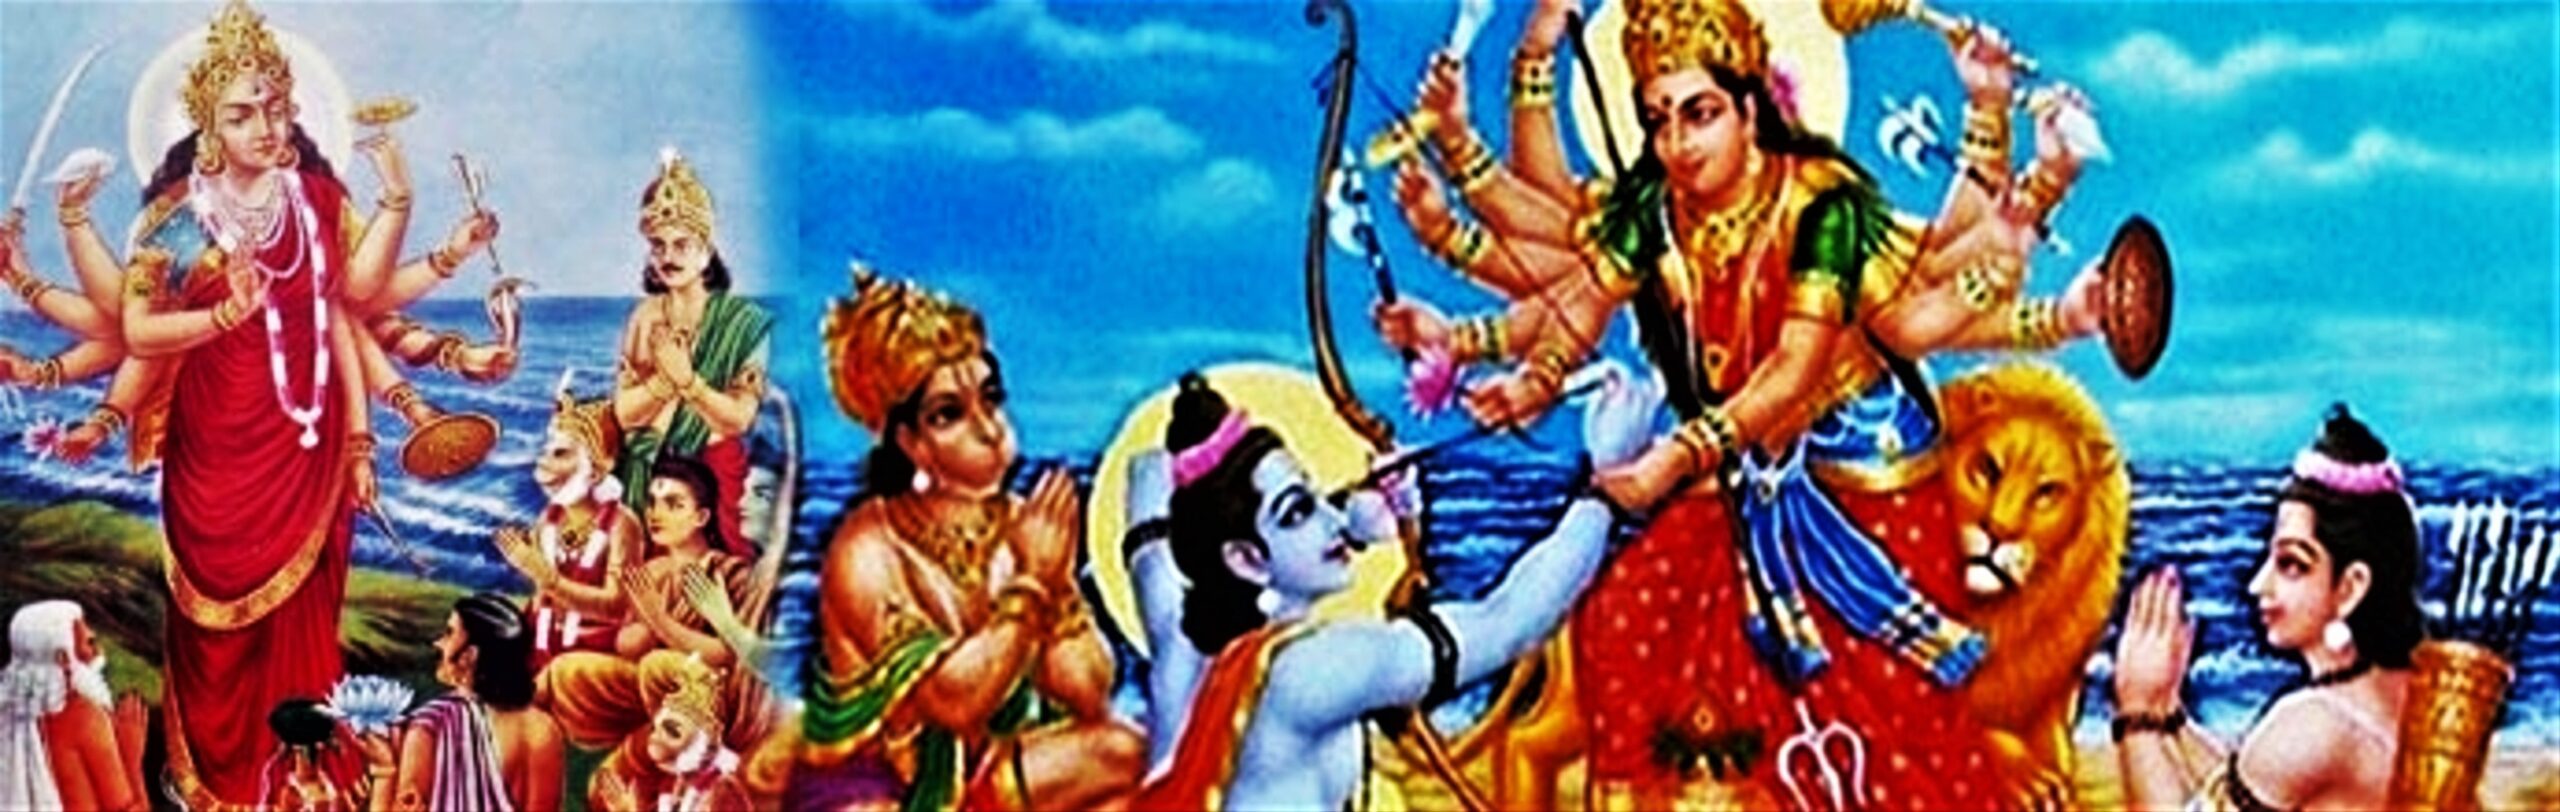 Akalbodhan - Worship of Goddess Durga by Lord Rama before killing Ravana | PC - bangalinet.com